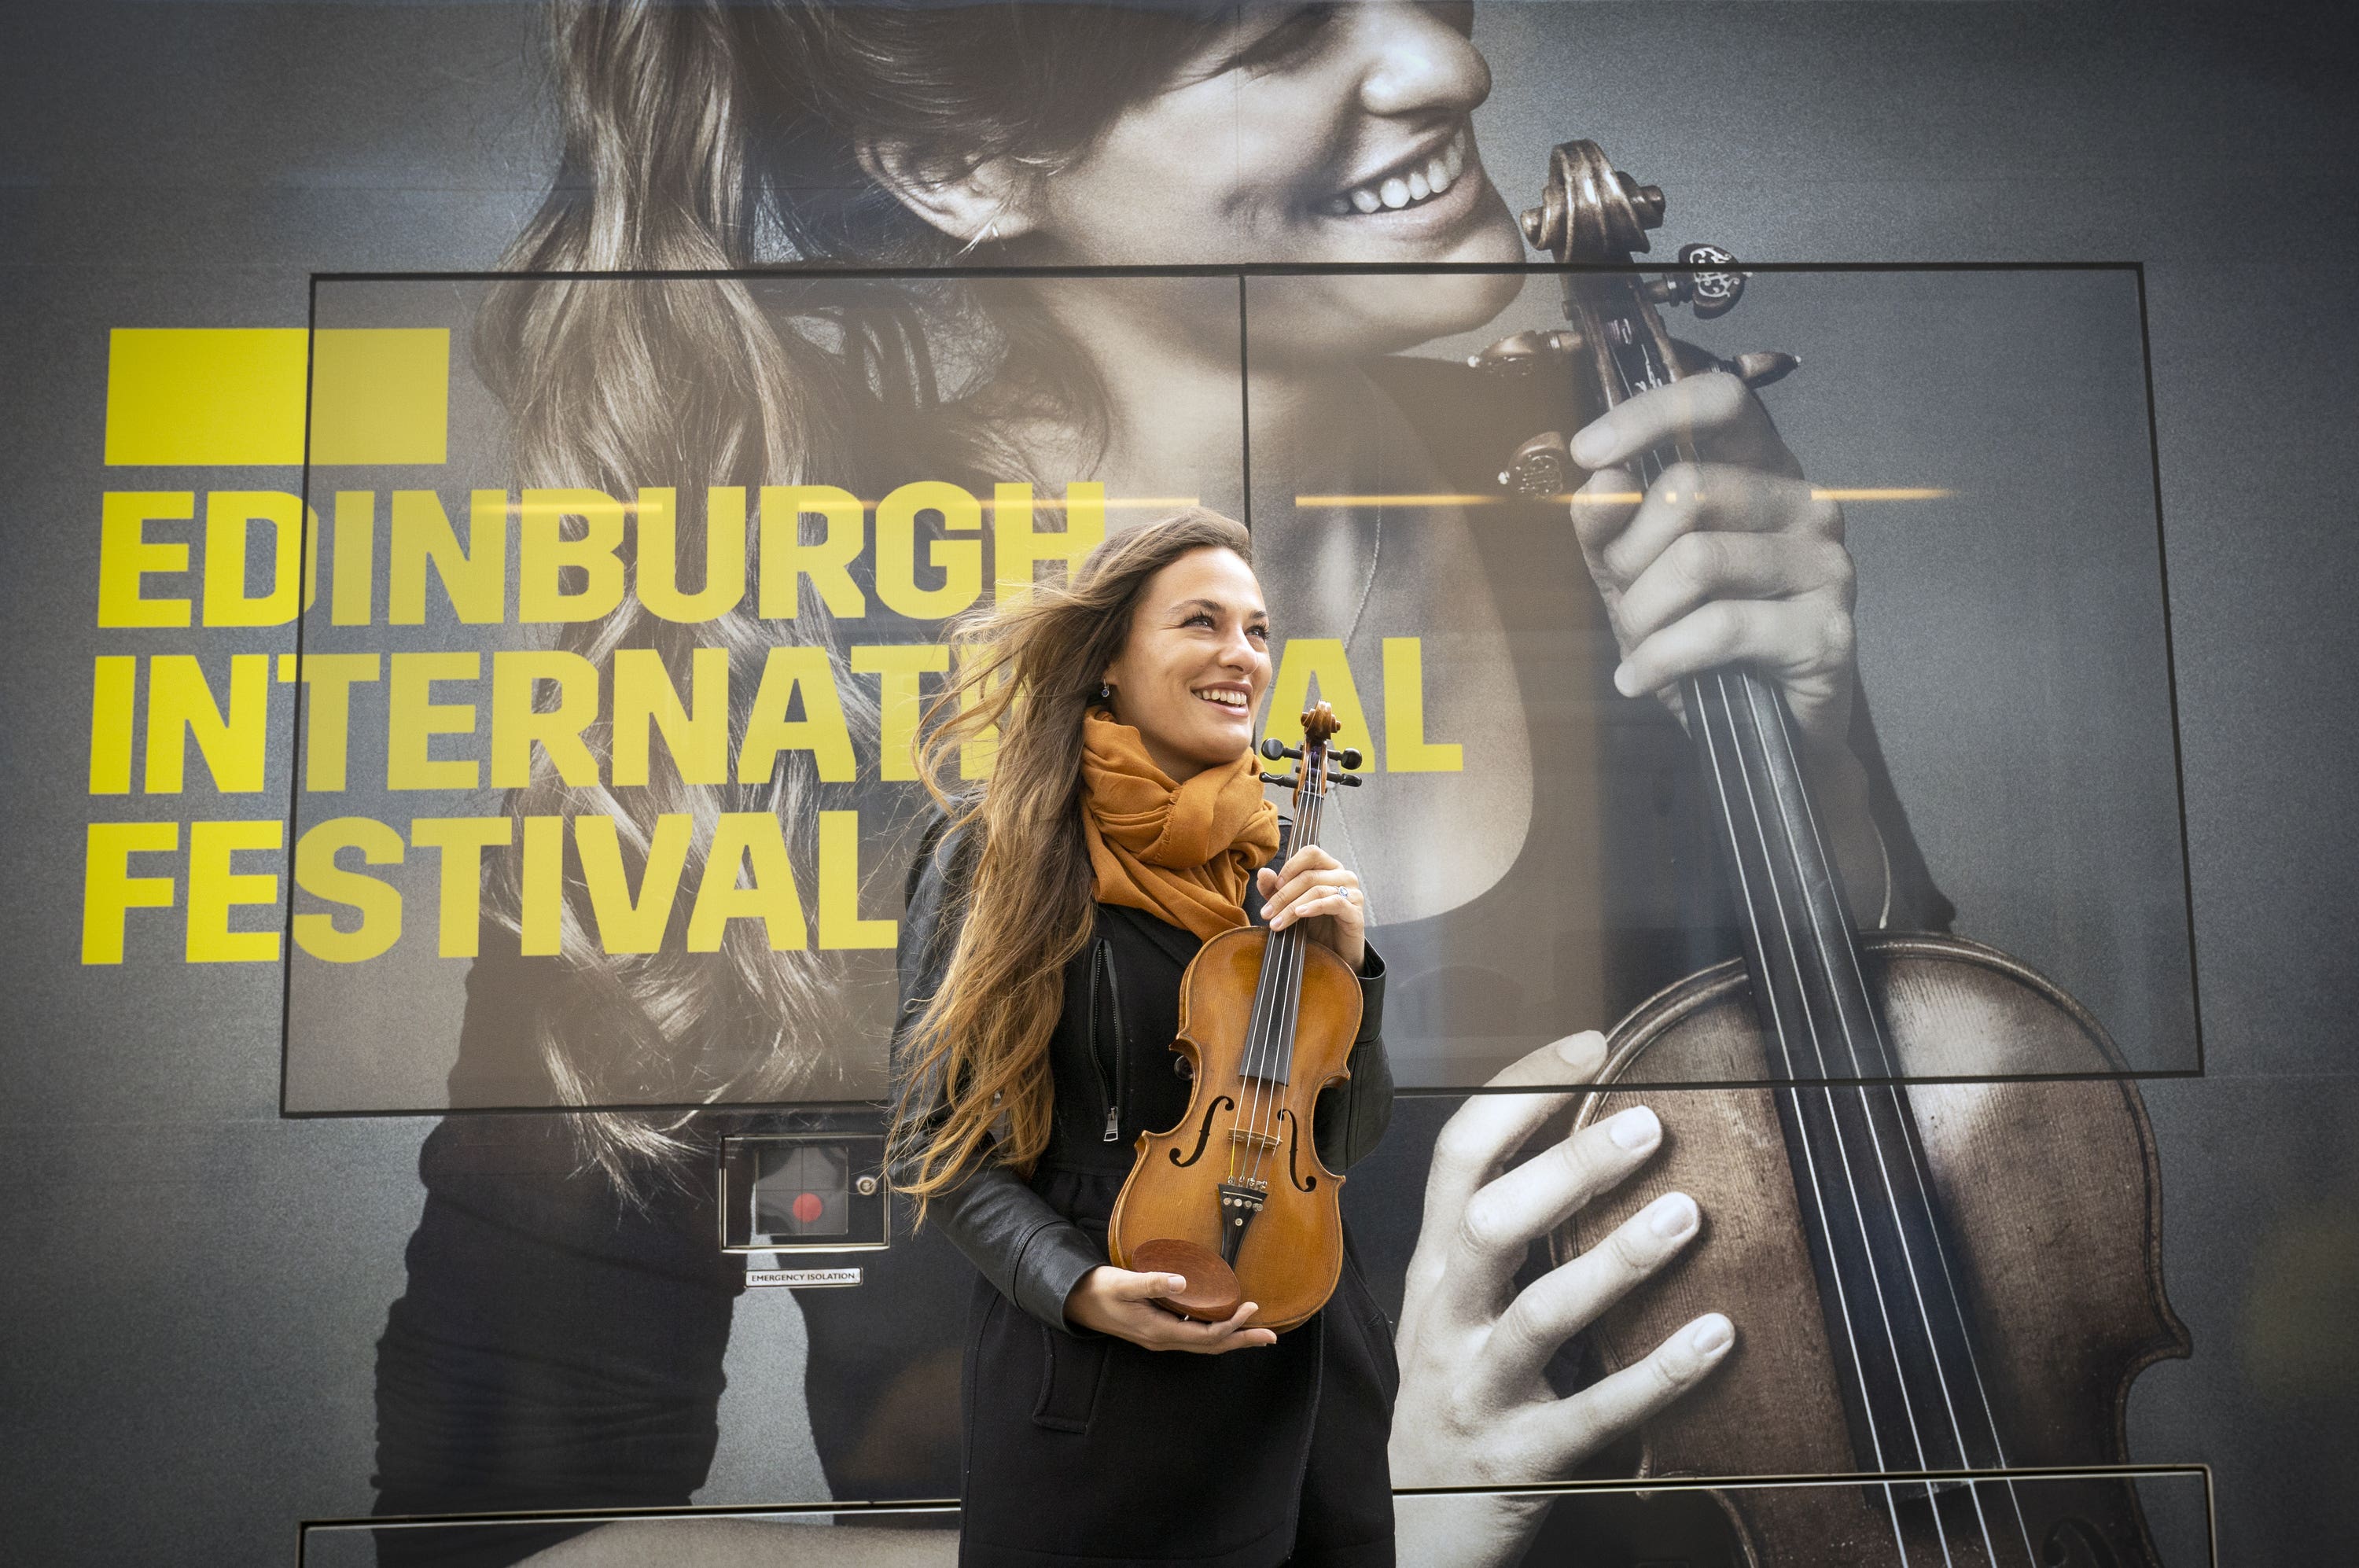 Director Nicola Benedetti said the Edinburgh International Festival will be a ‘momentous celebration’.